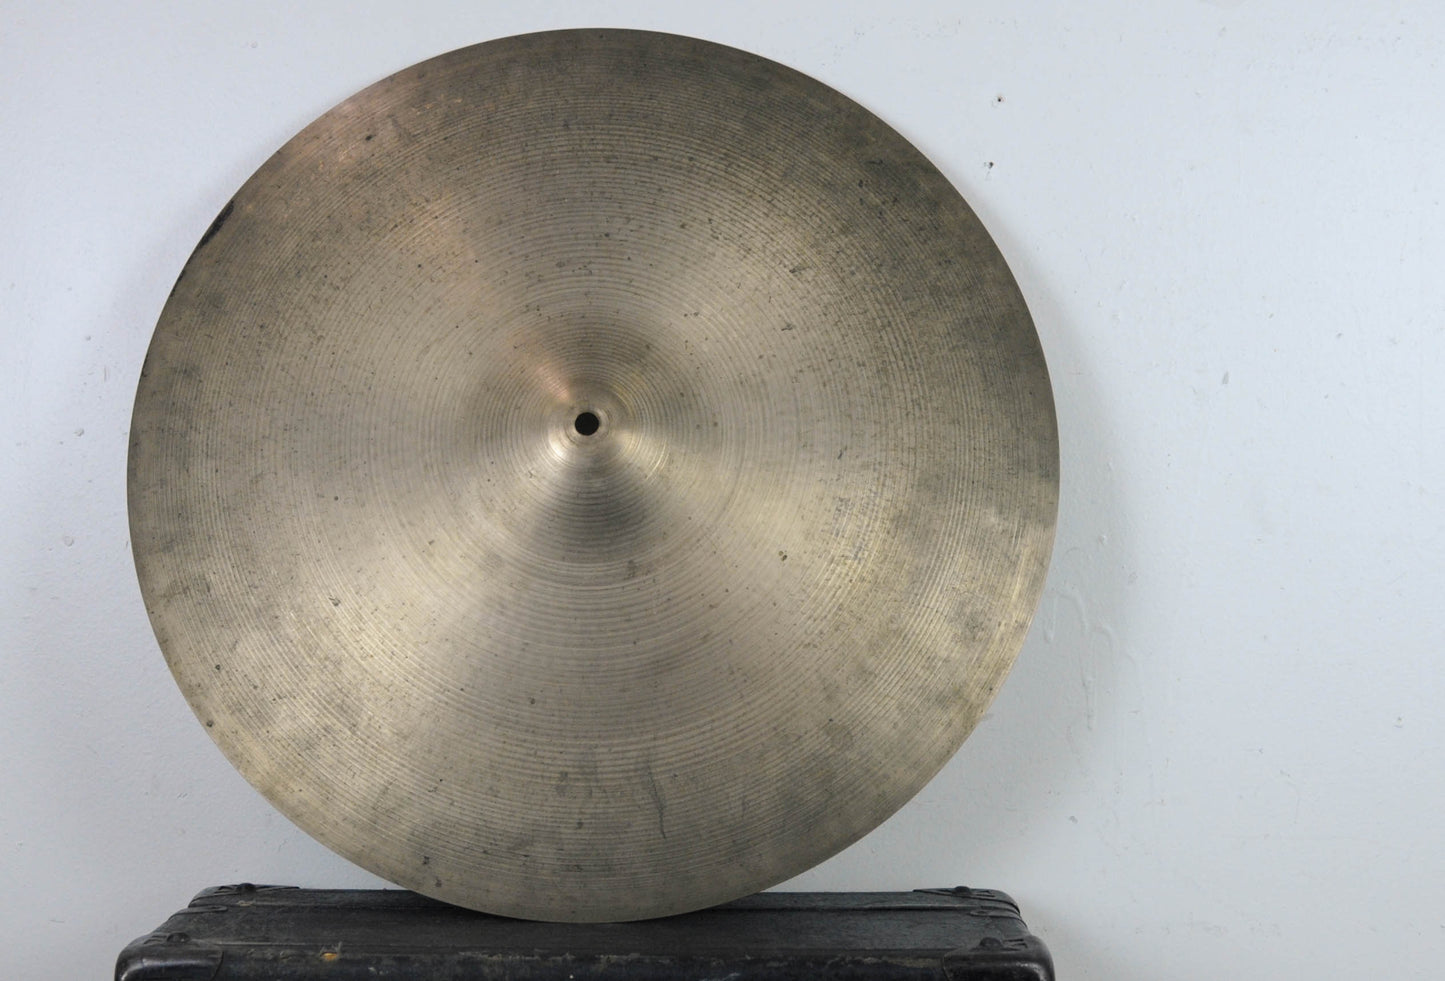 1960s Zildjian A 20" Medium Ride Cymbal 2223g